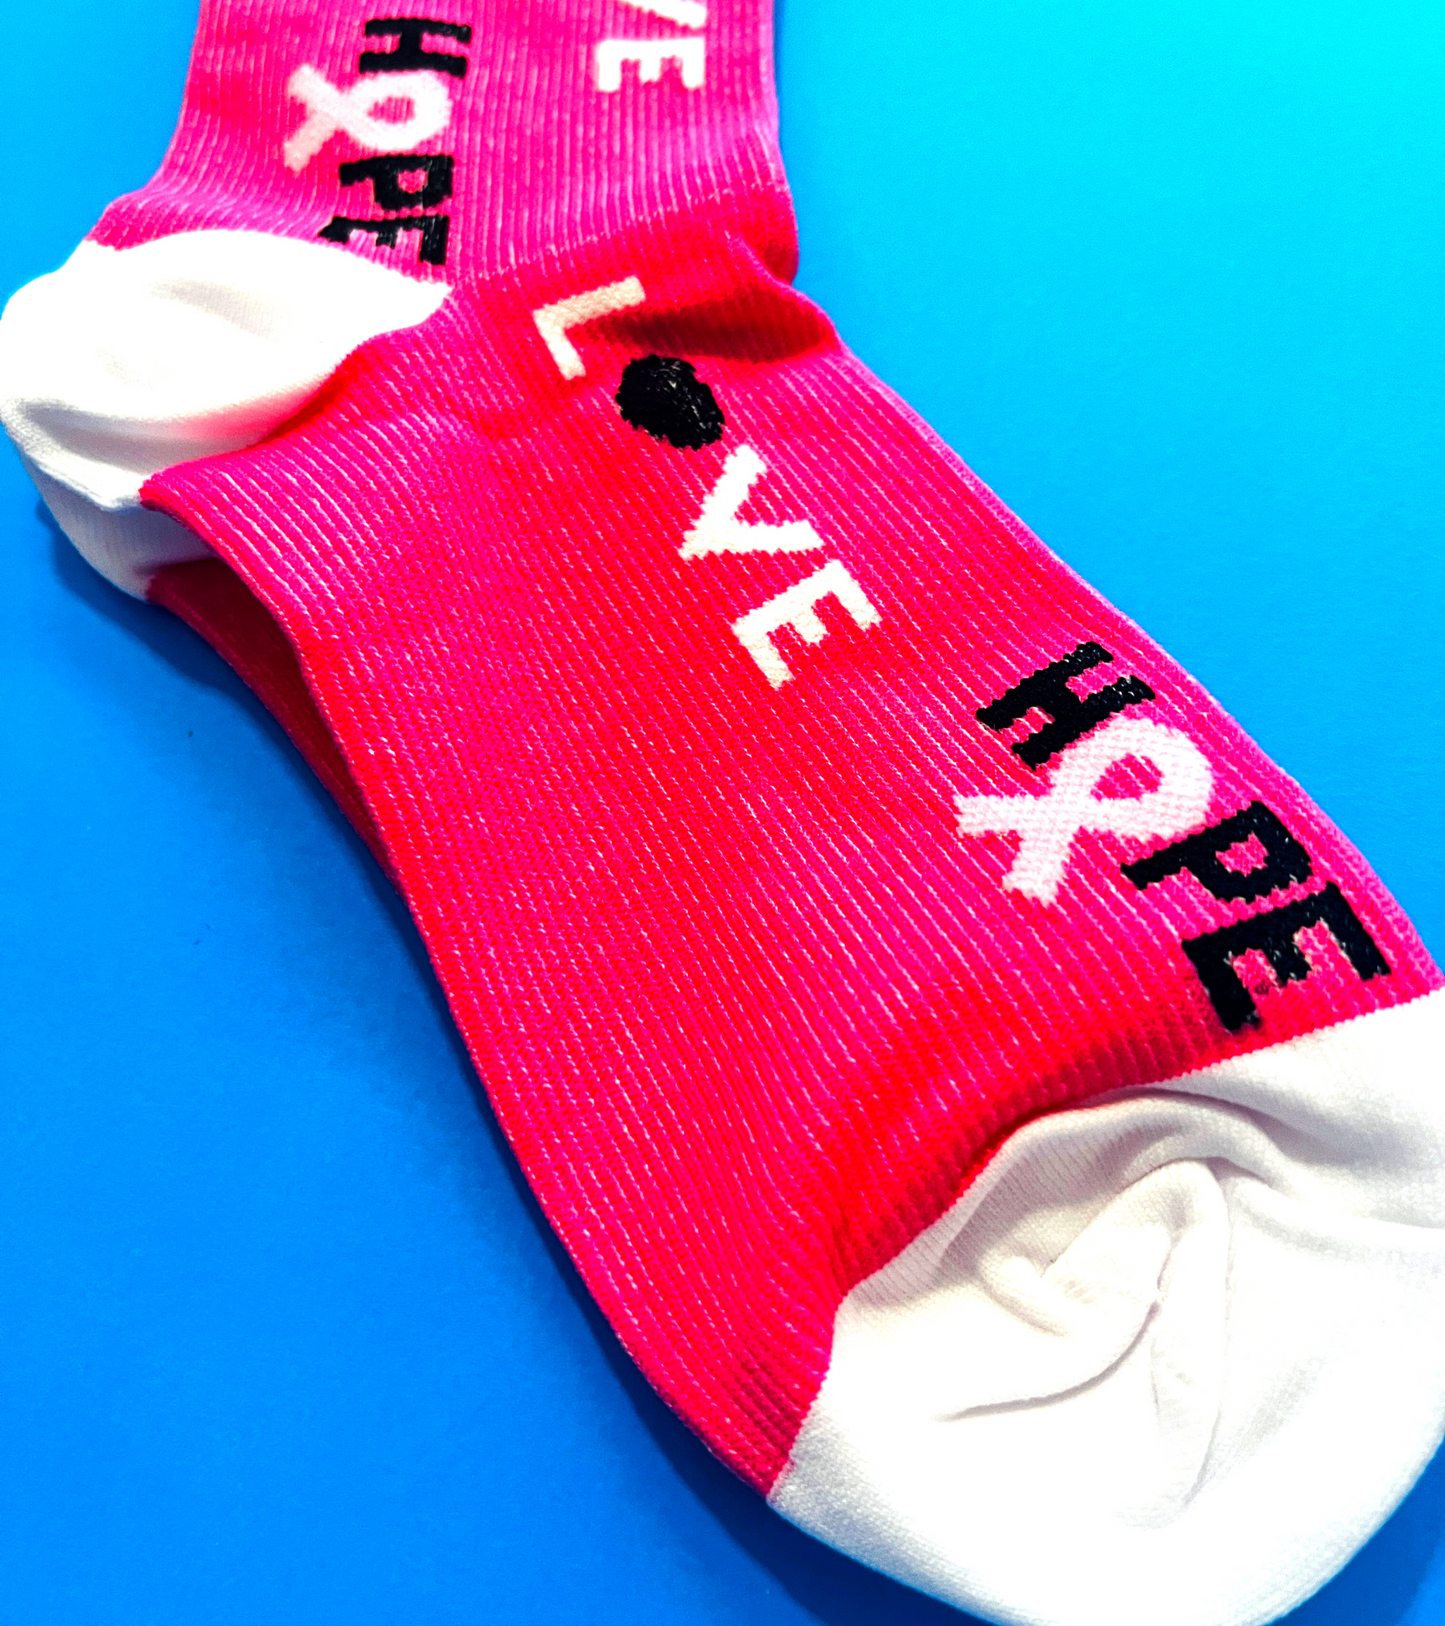 Hope & Heart Compression Socks